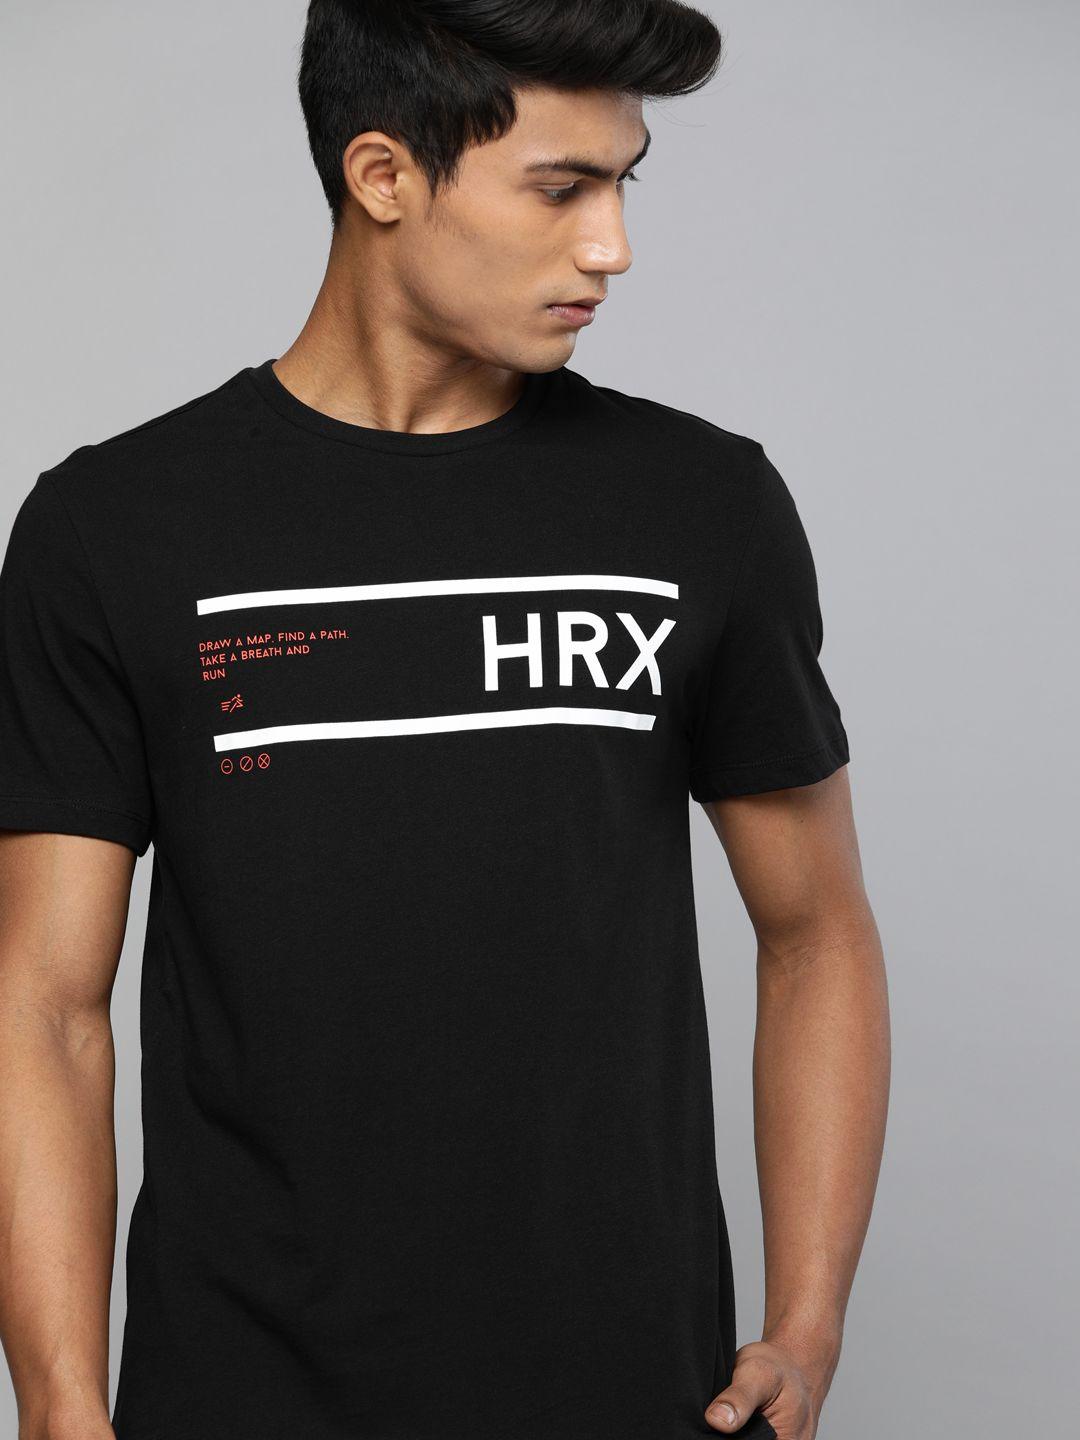 hrx-by-hrithik-roshan-men-jet-black-printed-bio-wash-antimicrobial-lifestyle-pure-cotton-t-shirt